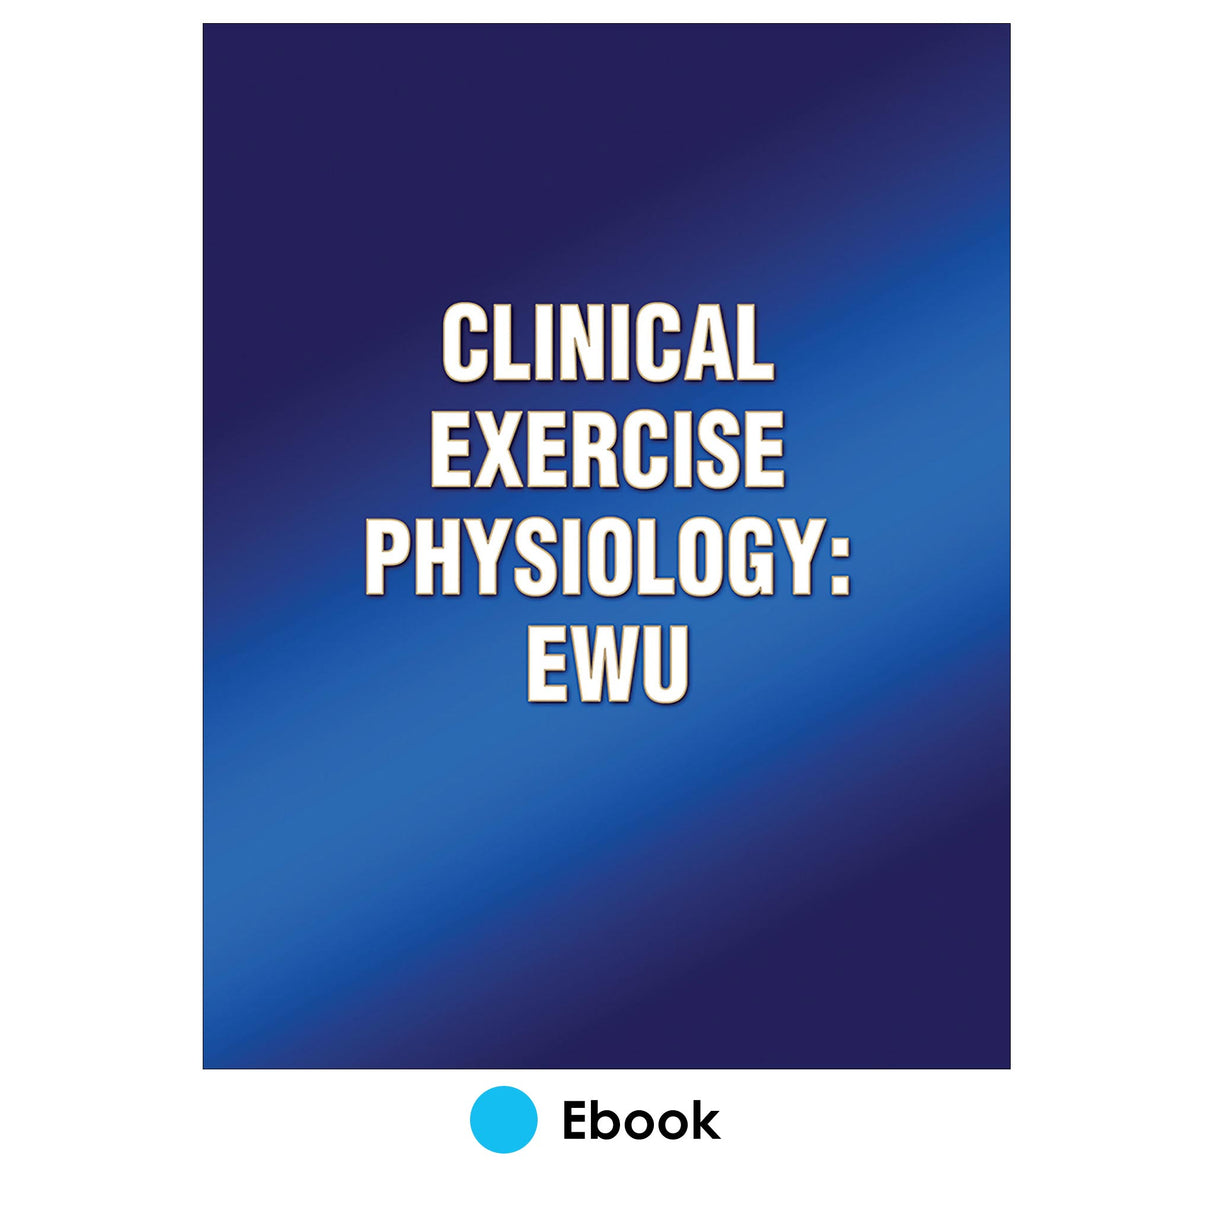 Clinical Exercise Physiology: EWU